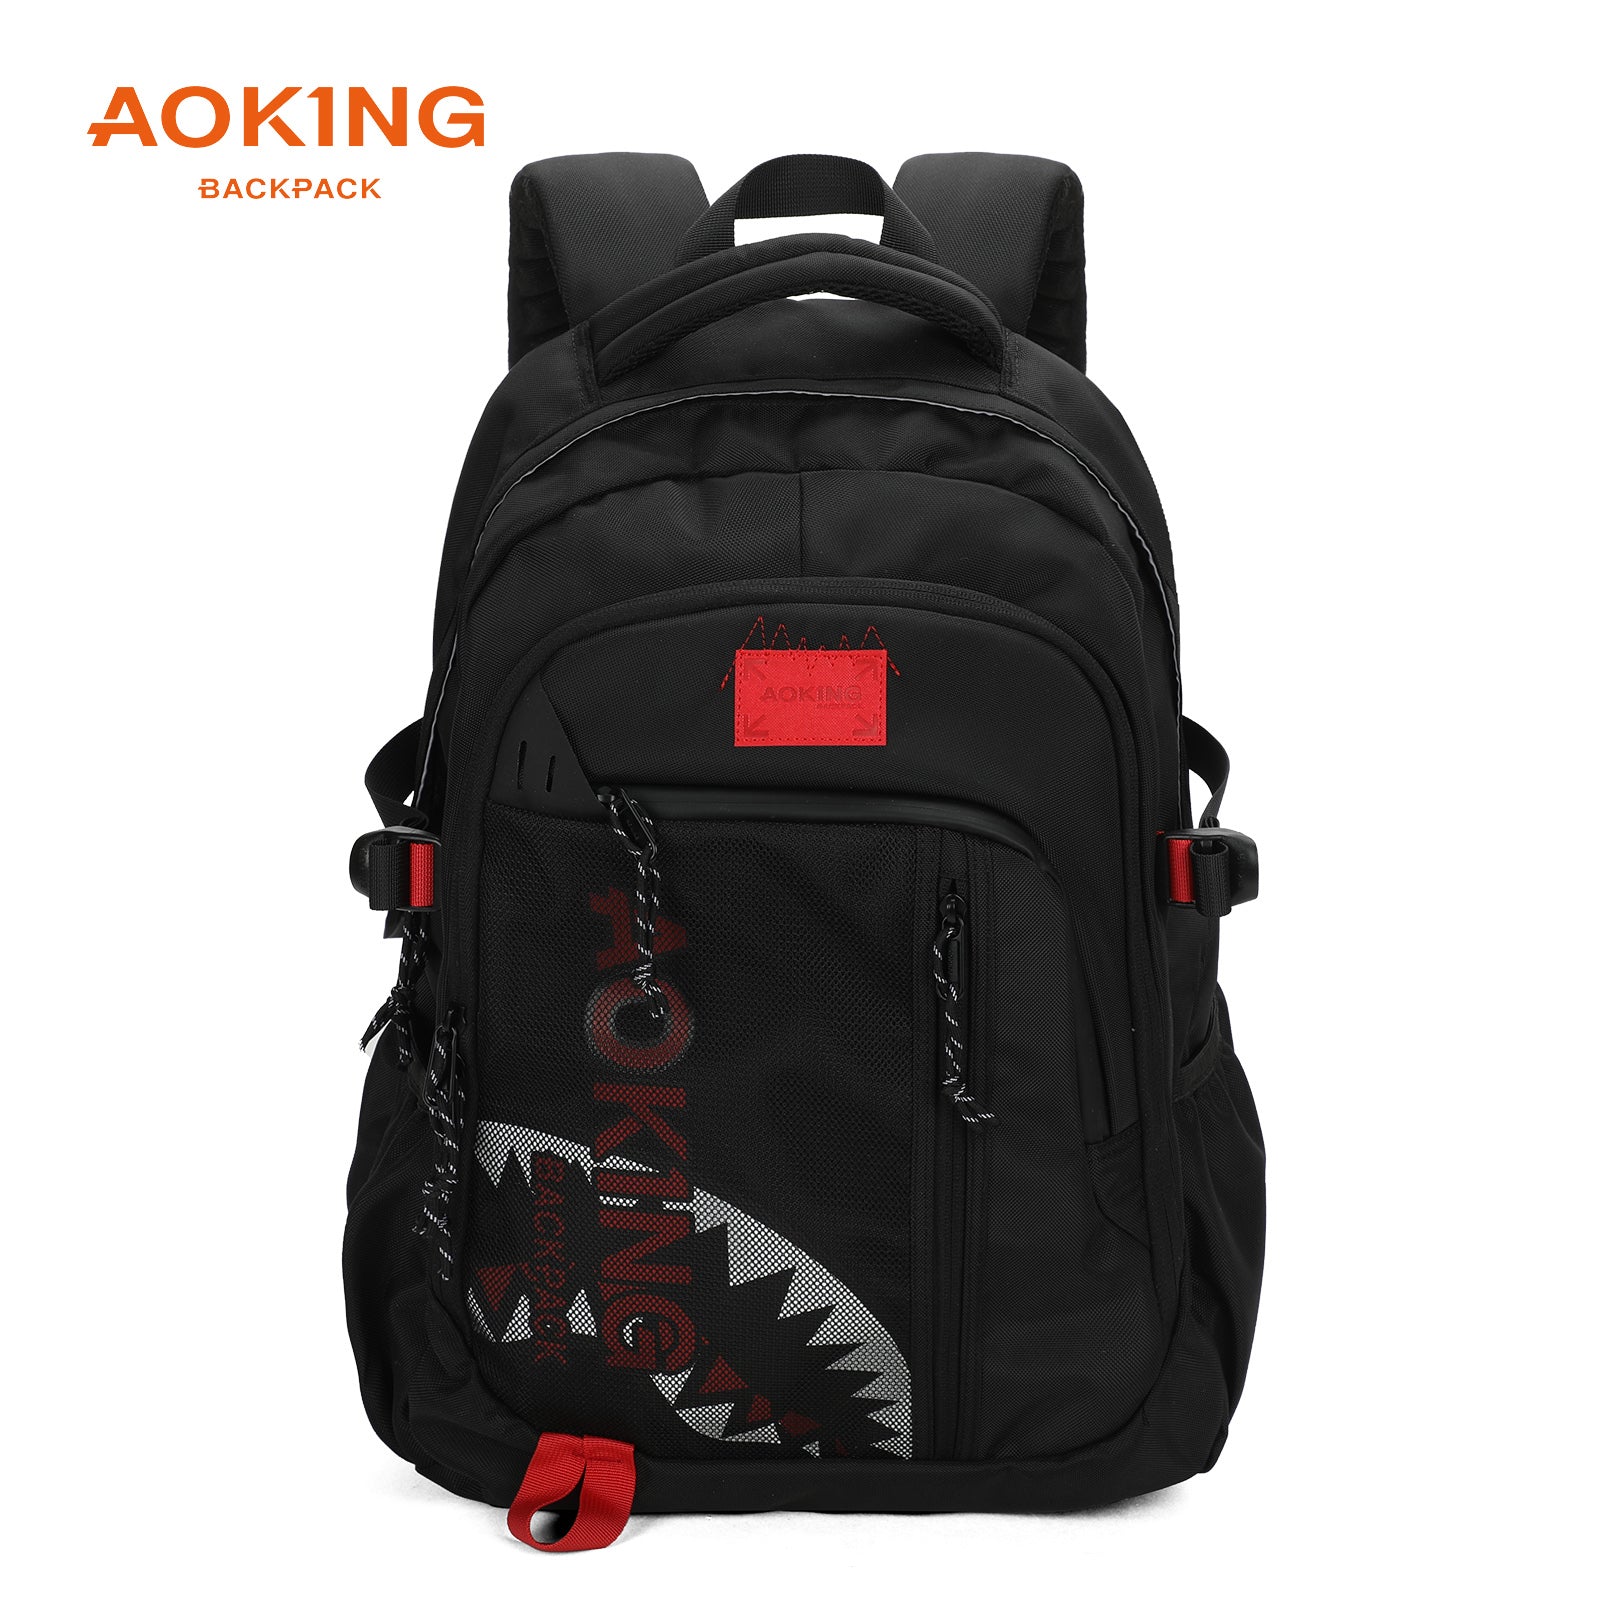 Aoking Backpack Big Shark Casual Backpack Student Bag XN3358